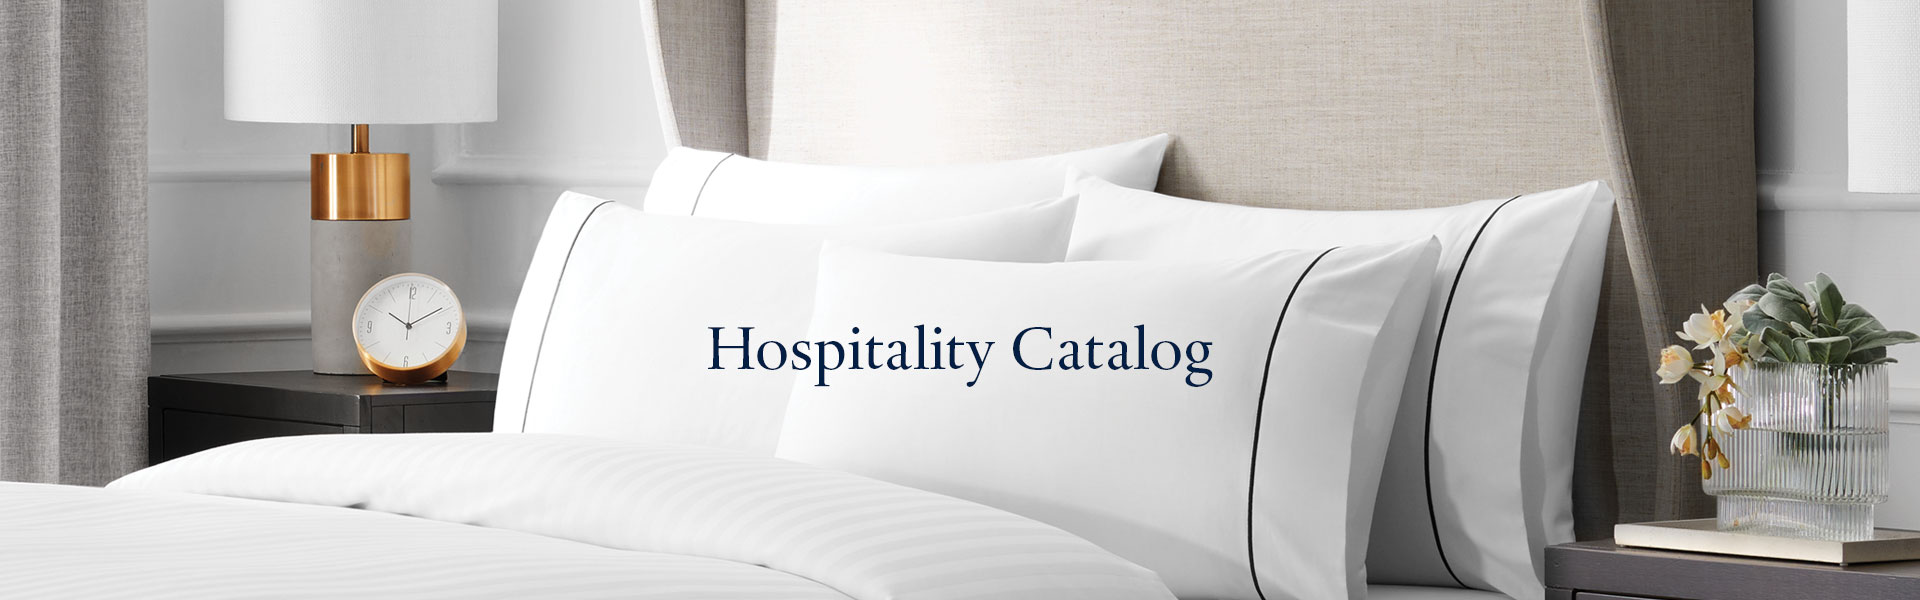  Hospitality products catalog